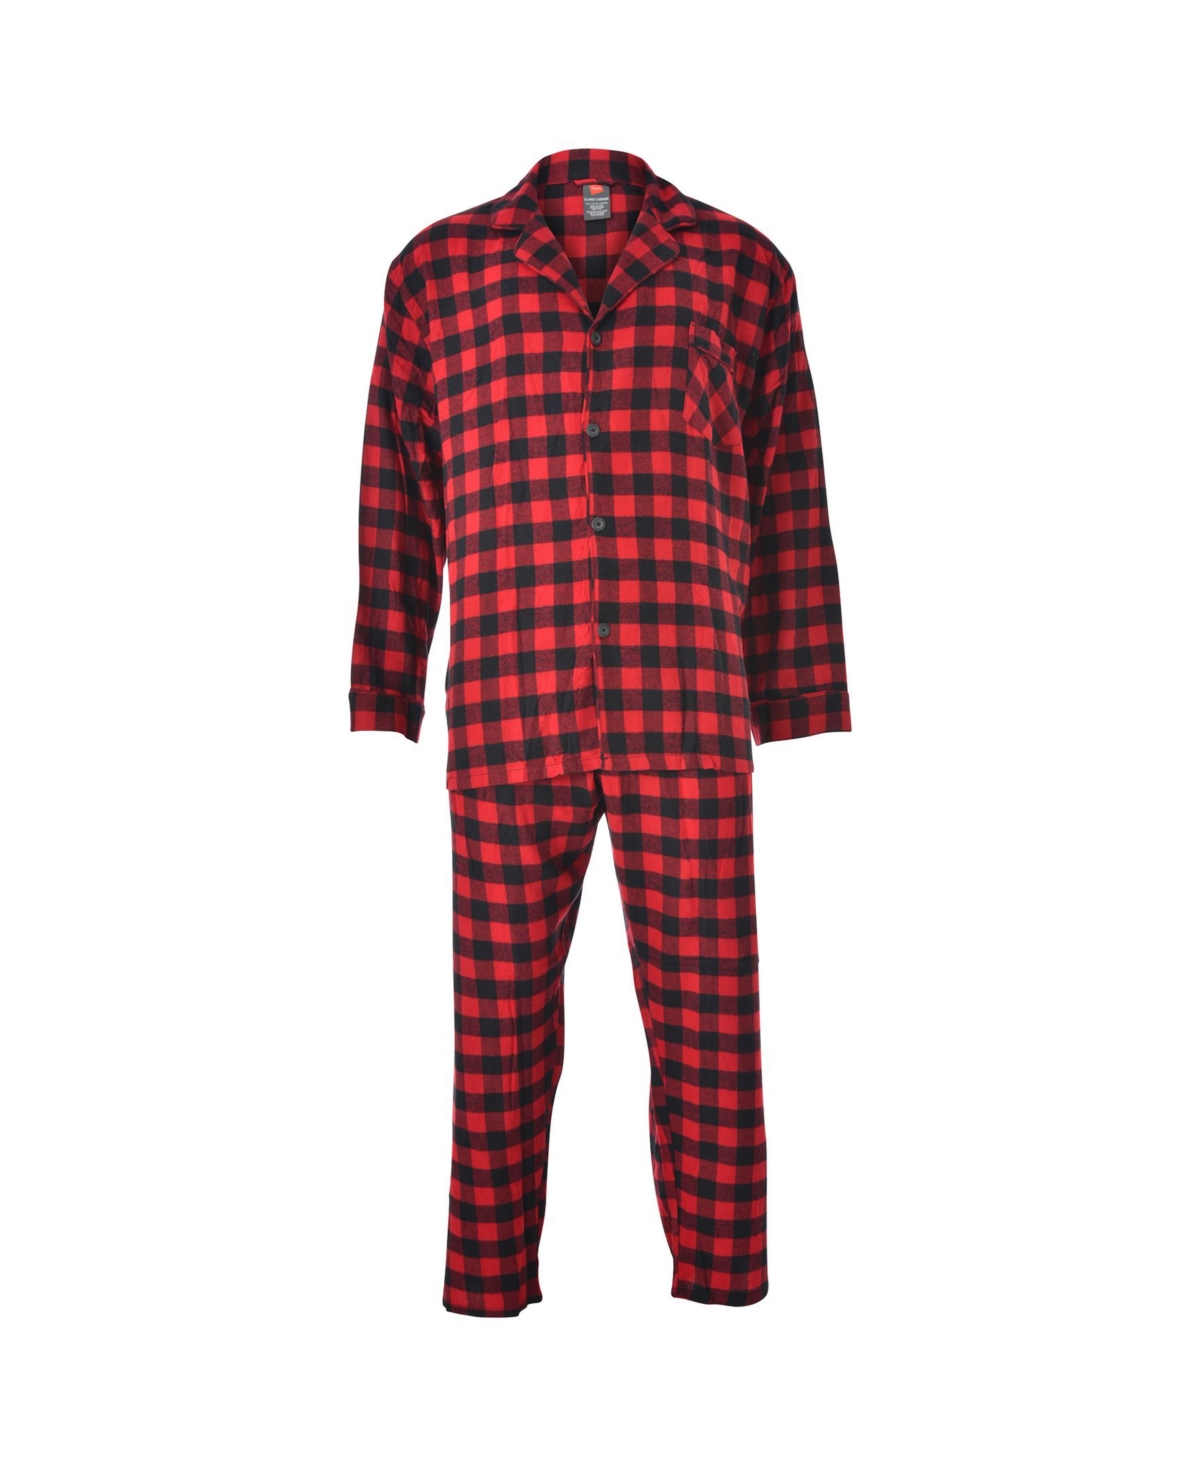 Hanes Men's Flannel Plaid Pajama Set In Red,black Buffalo Check